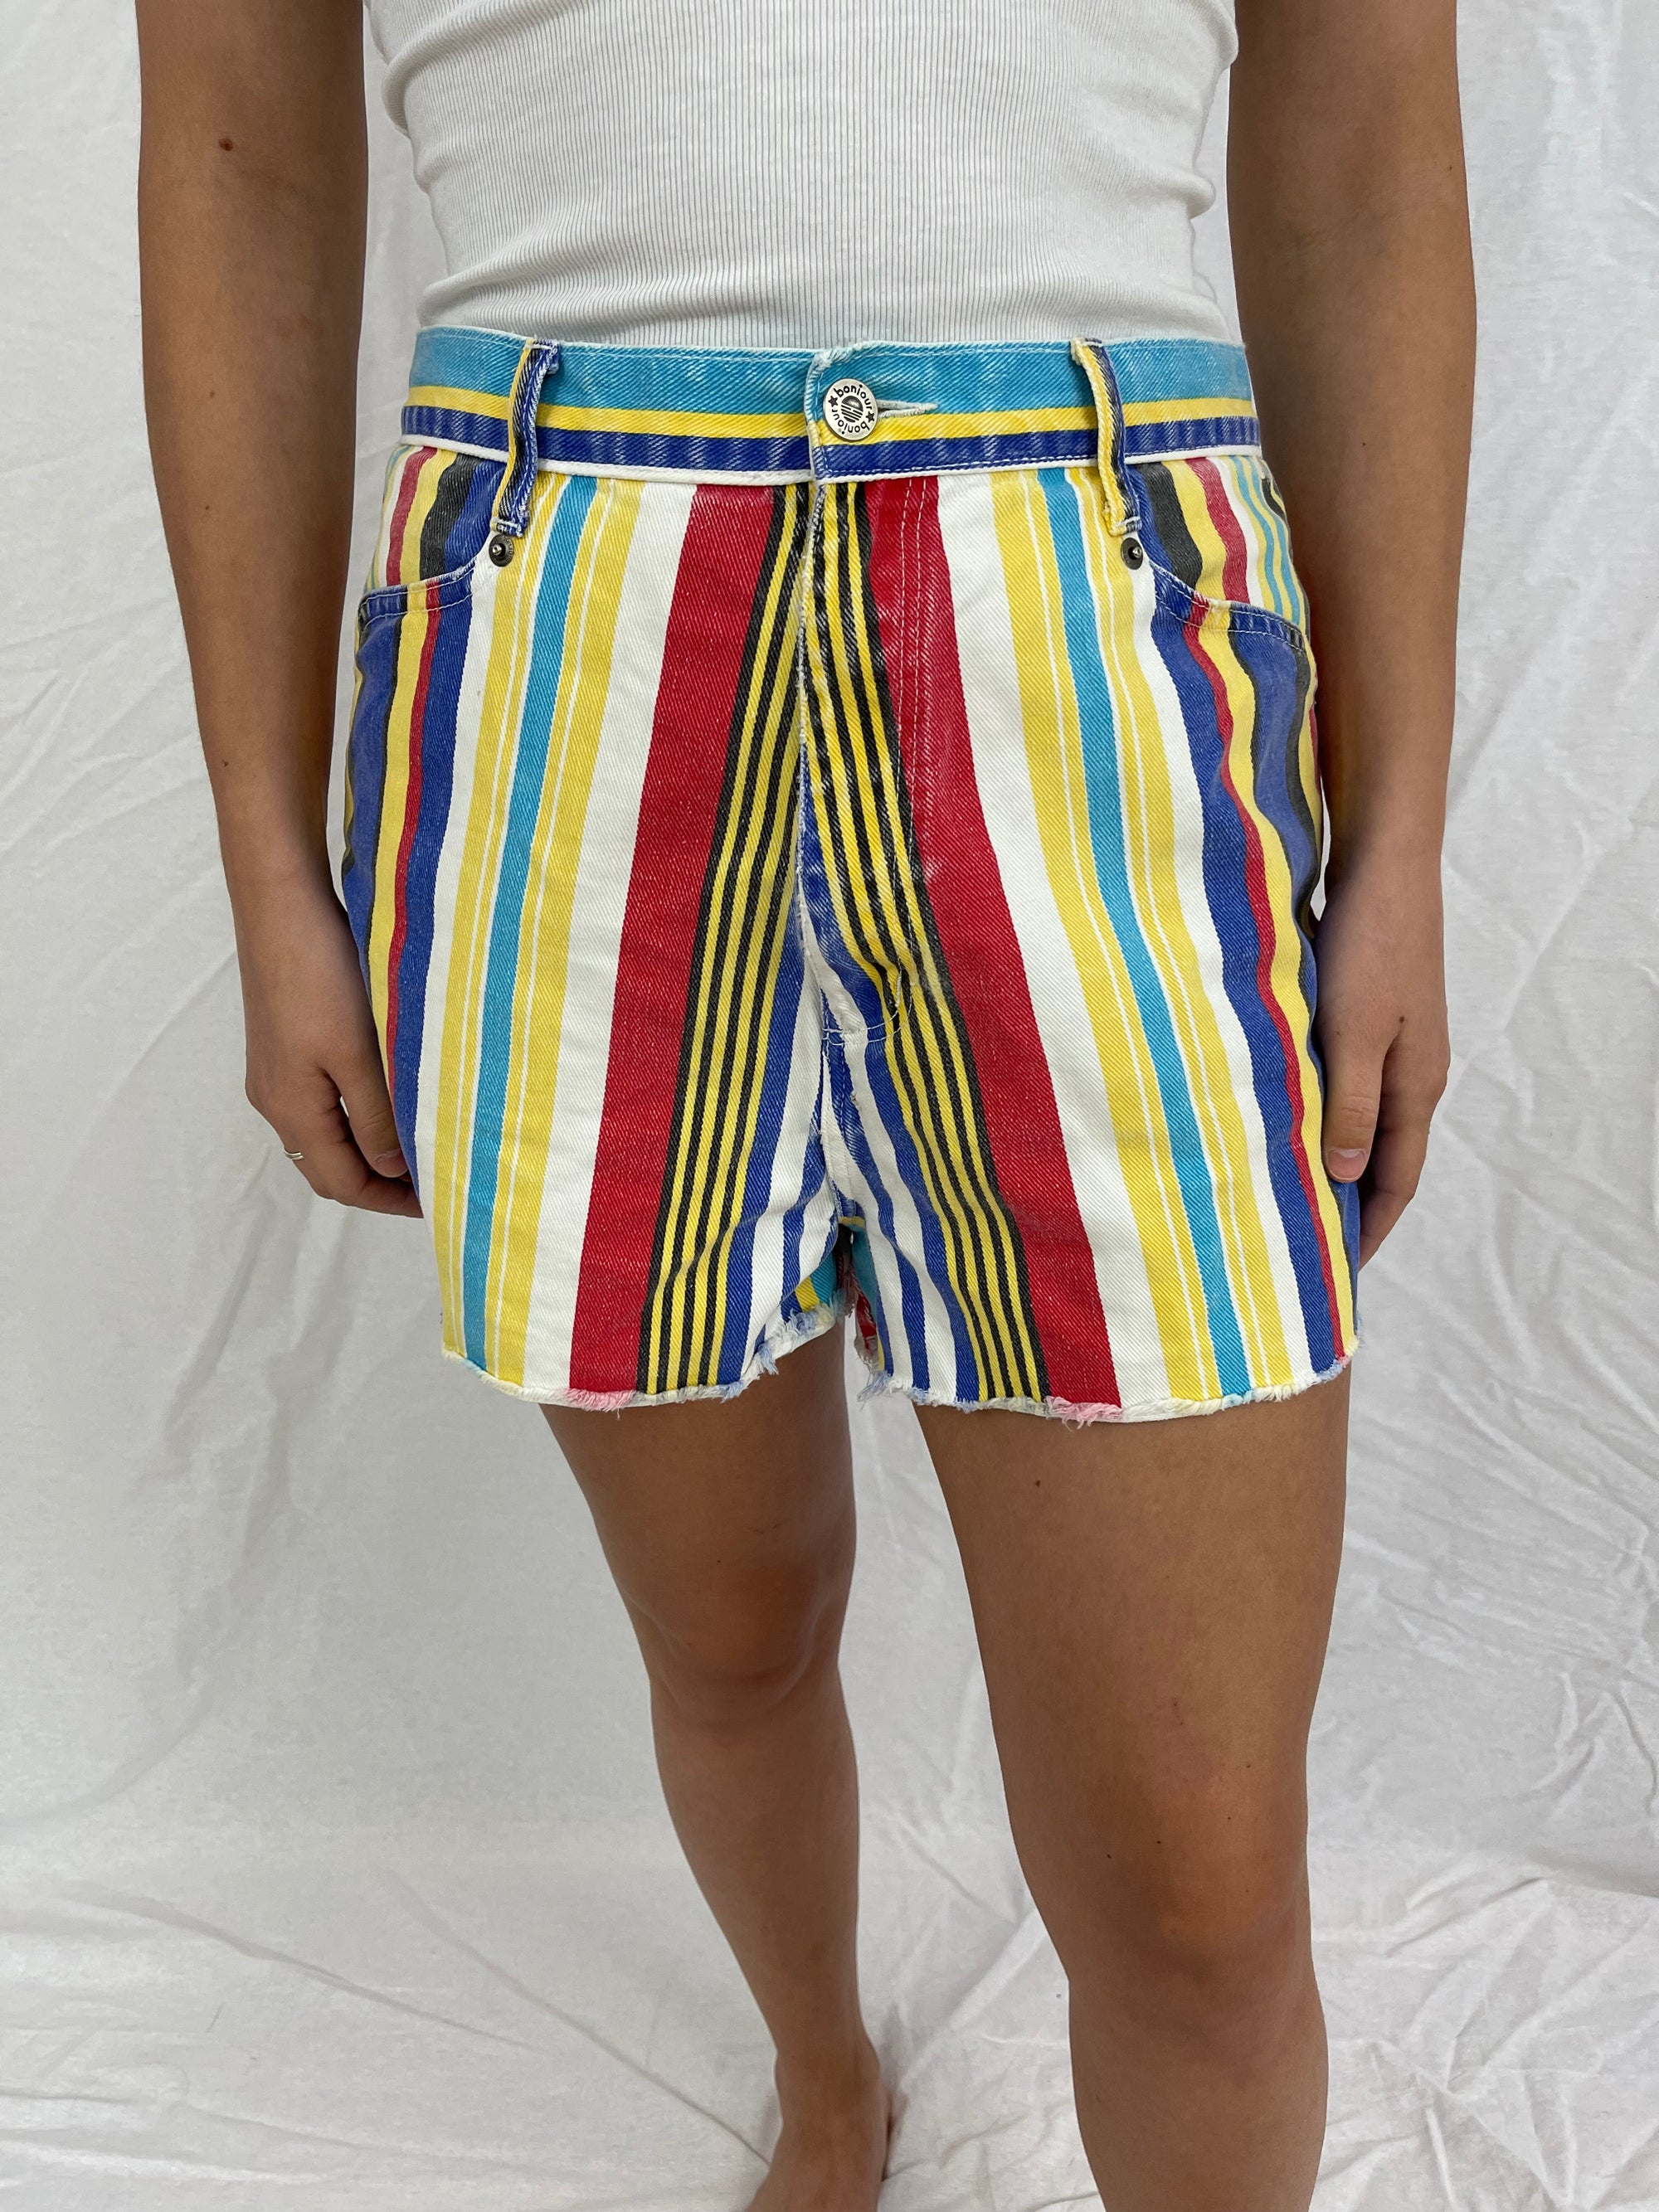 Vintage Bonjour Multicolor Striped Denim Shorts size 13/14